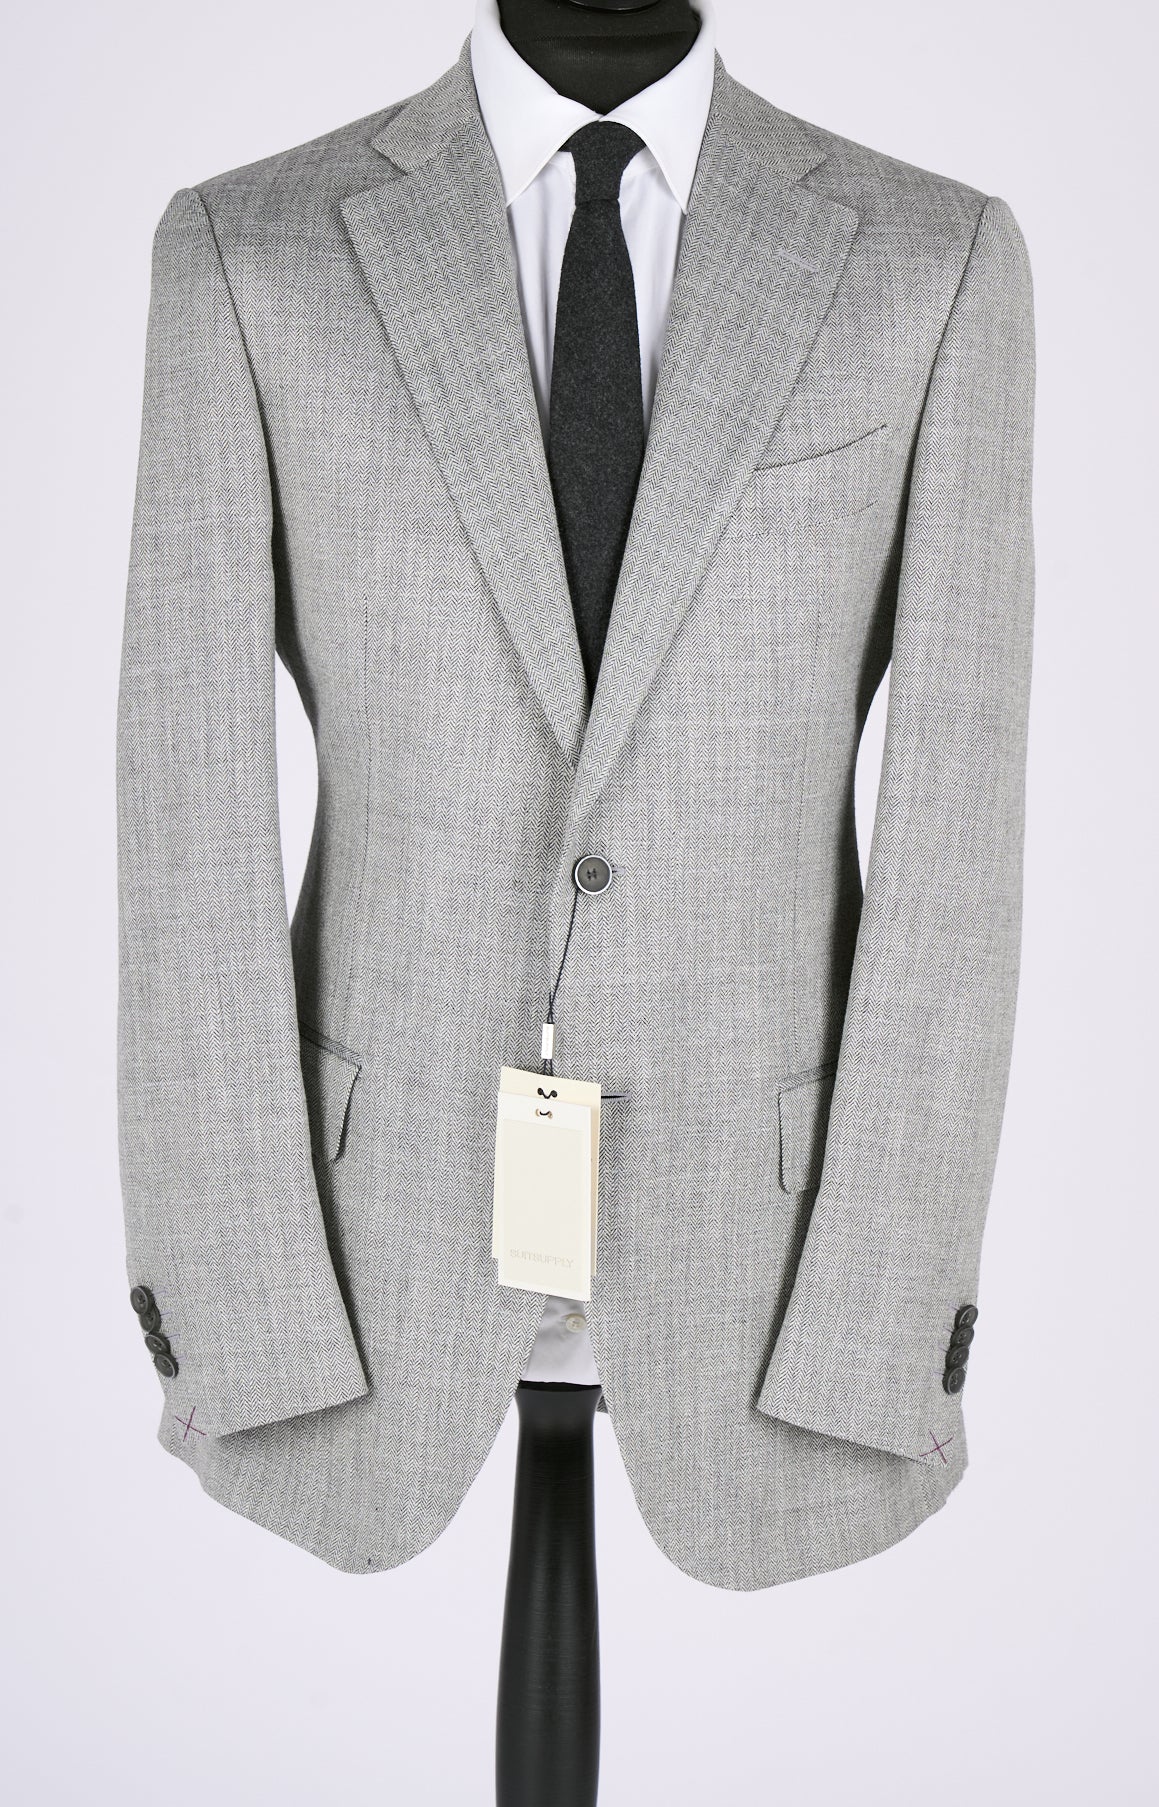 New Suitsupply Lazio Gray Herringbone Wool, Silk, Linen Suit - Size 36R